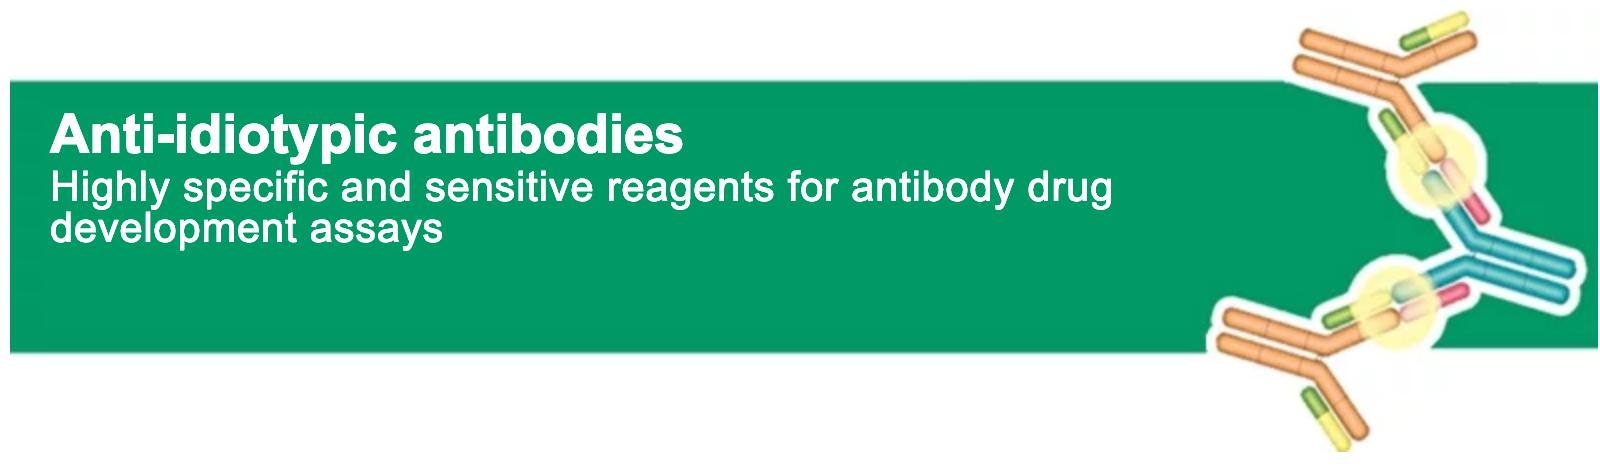 Bio-Rad-Introduces-Anti-Eculizumab-Antibodies